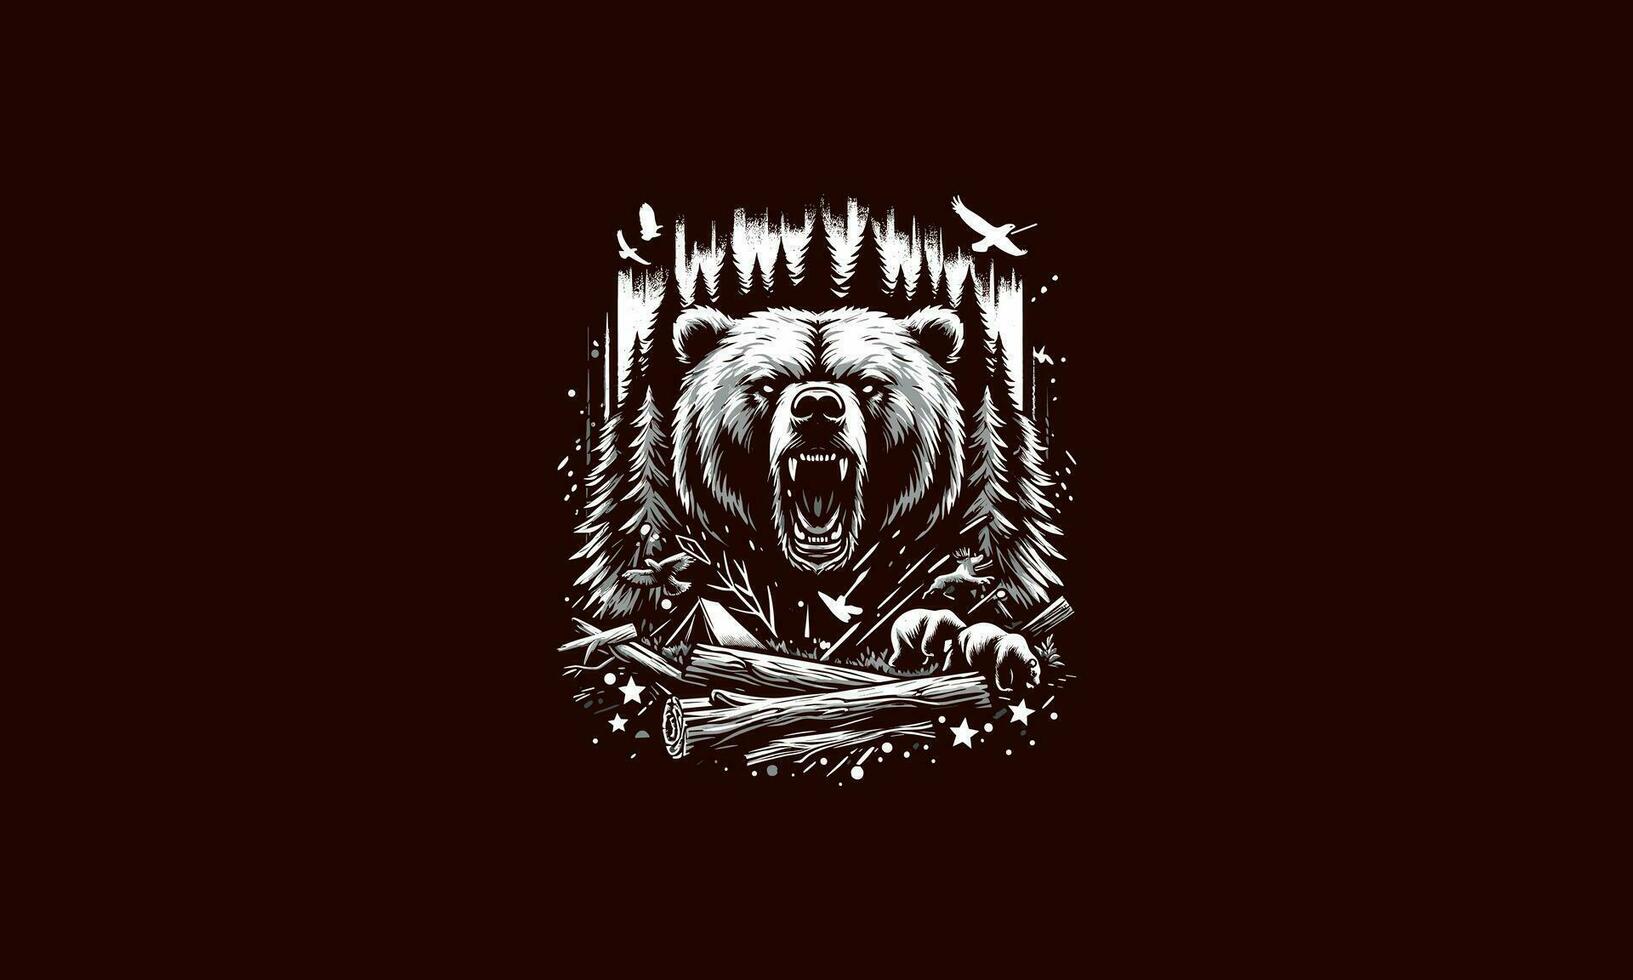 bear attack on forest vector artwork design